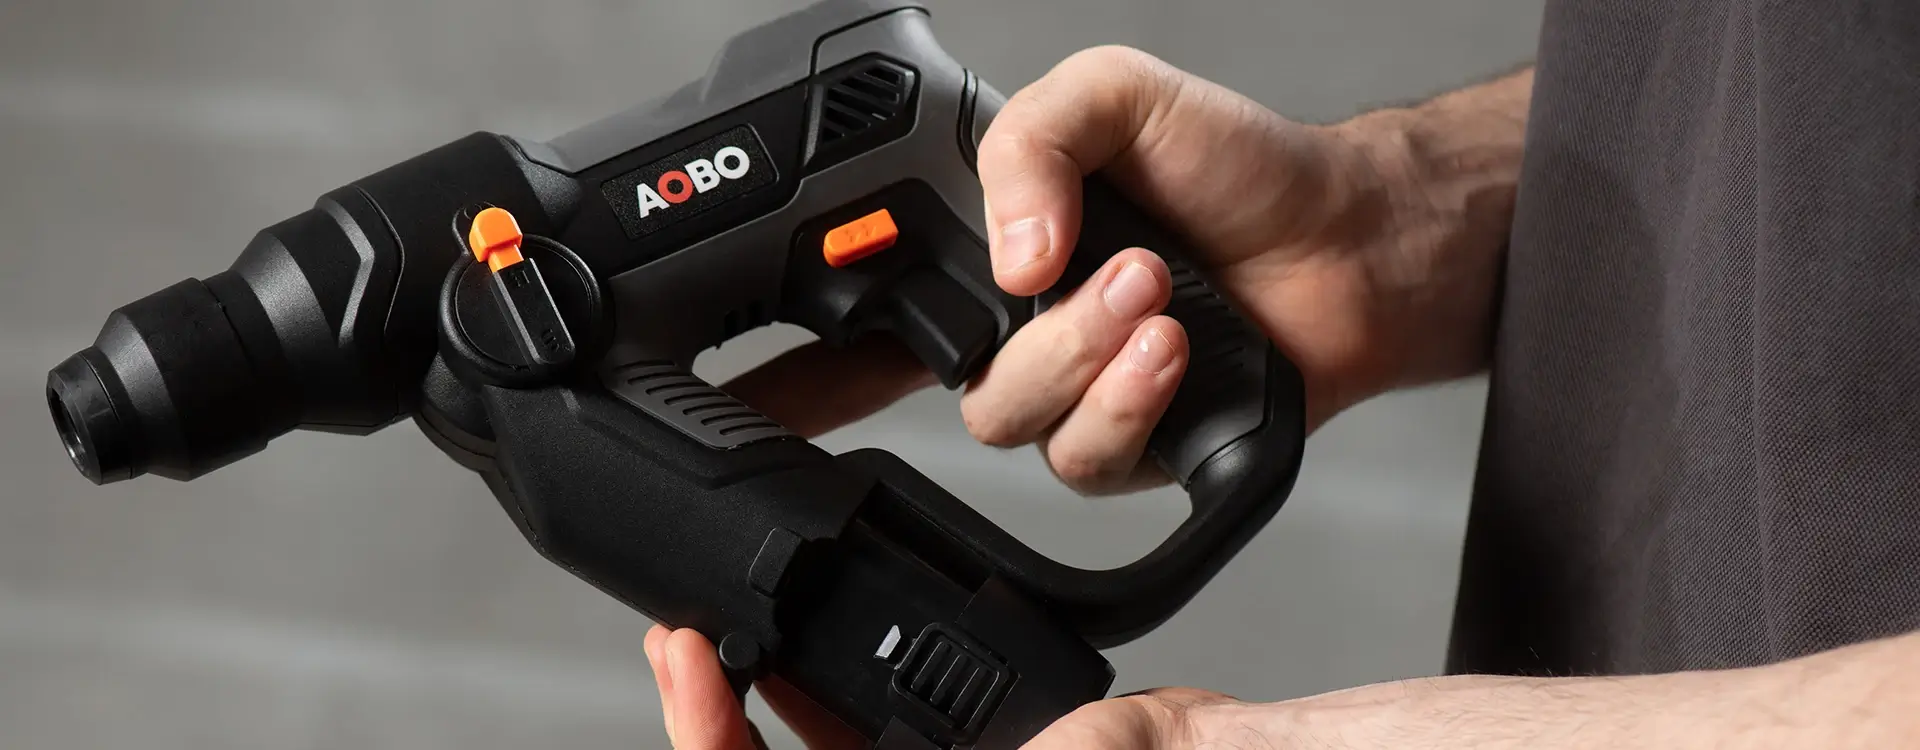 AOBO power tool